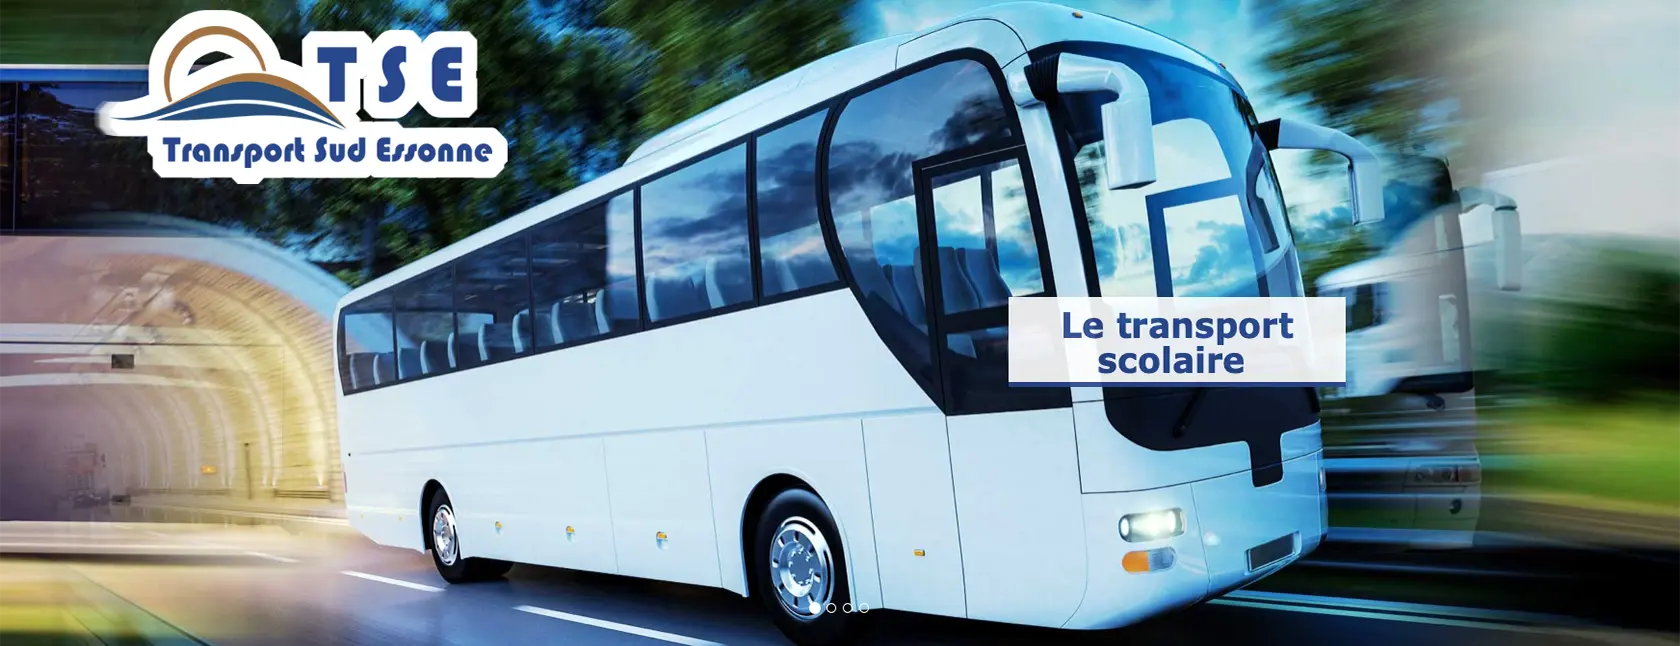 Transport Sud Essonne